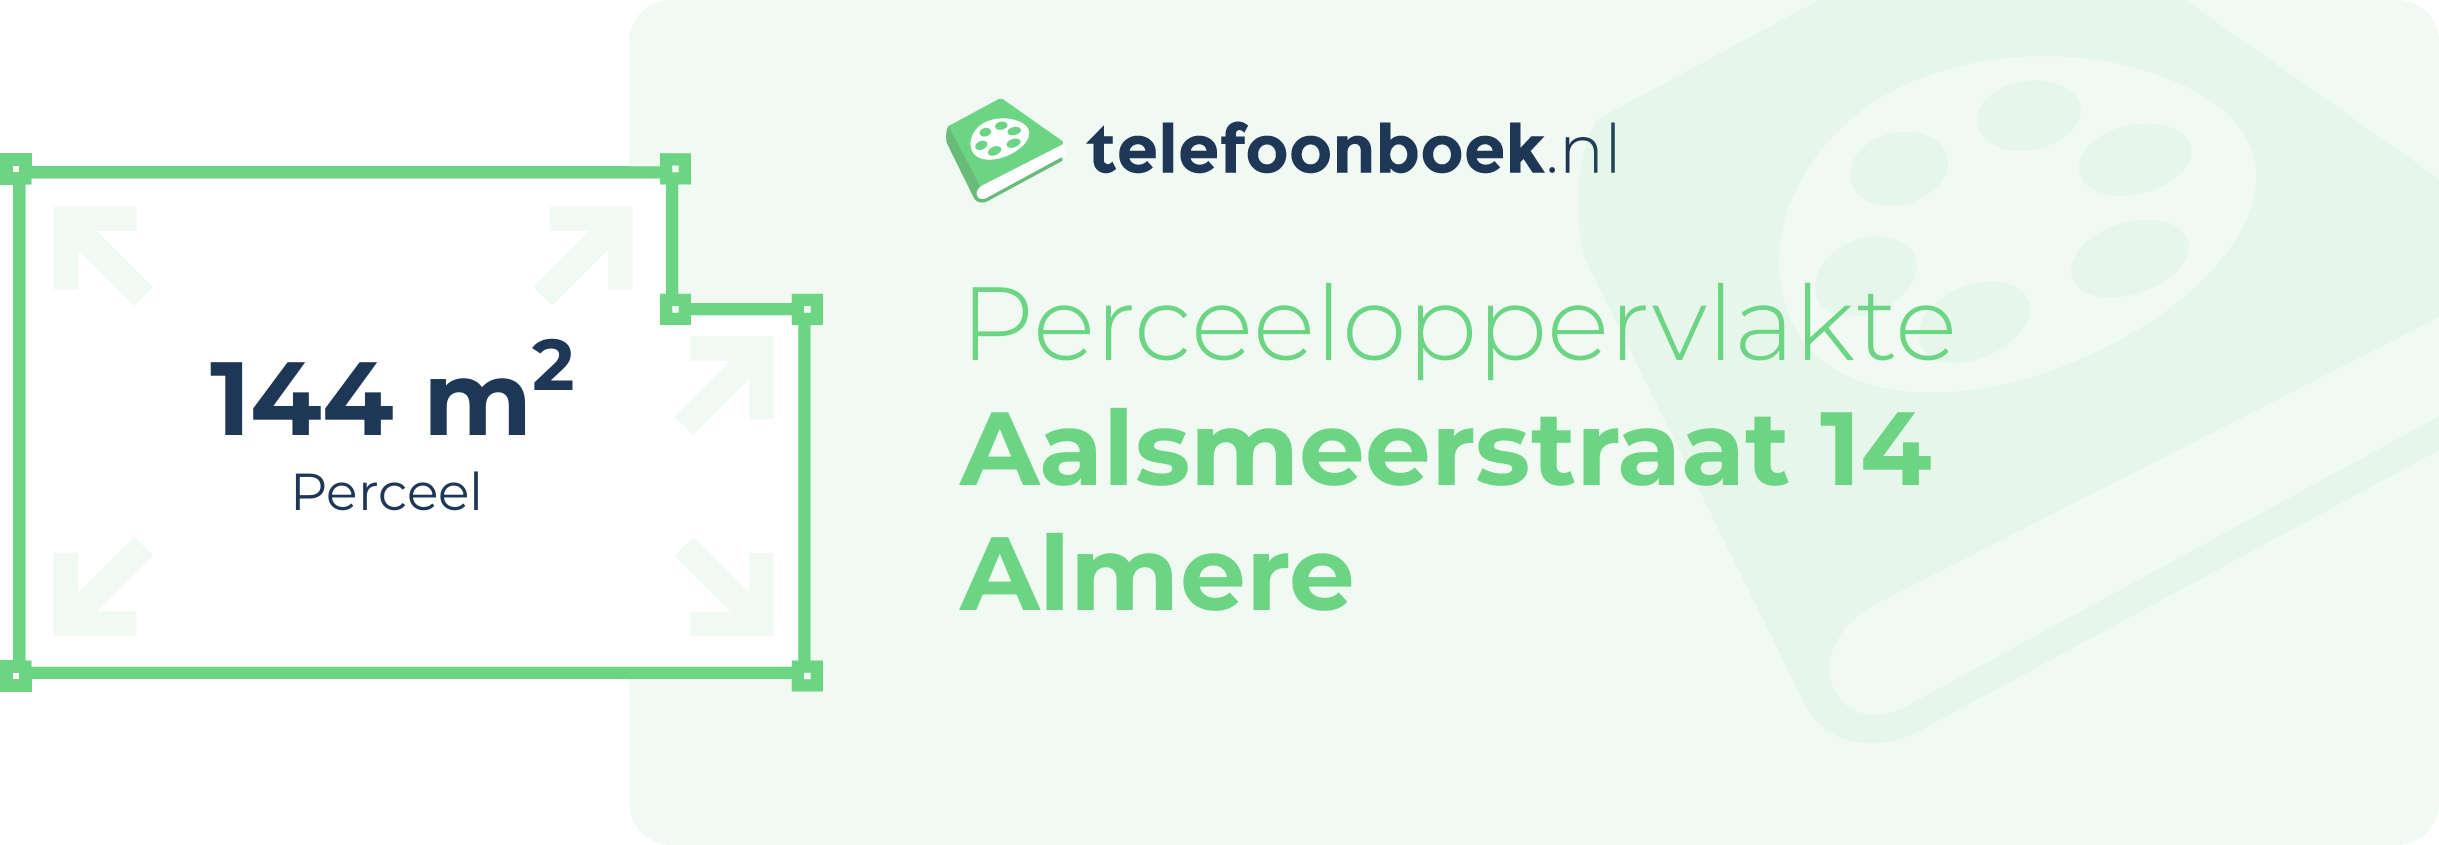 Perceeloppervlakte Aalsmeerstraat 14 Almere